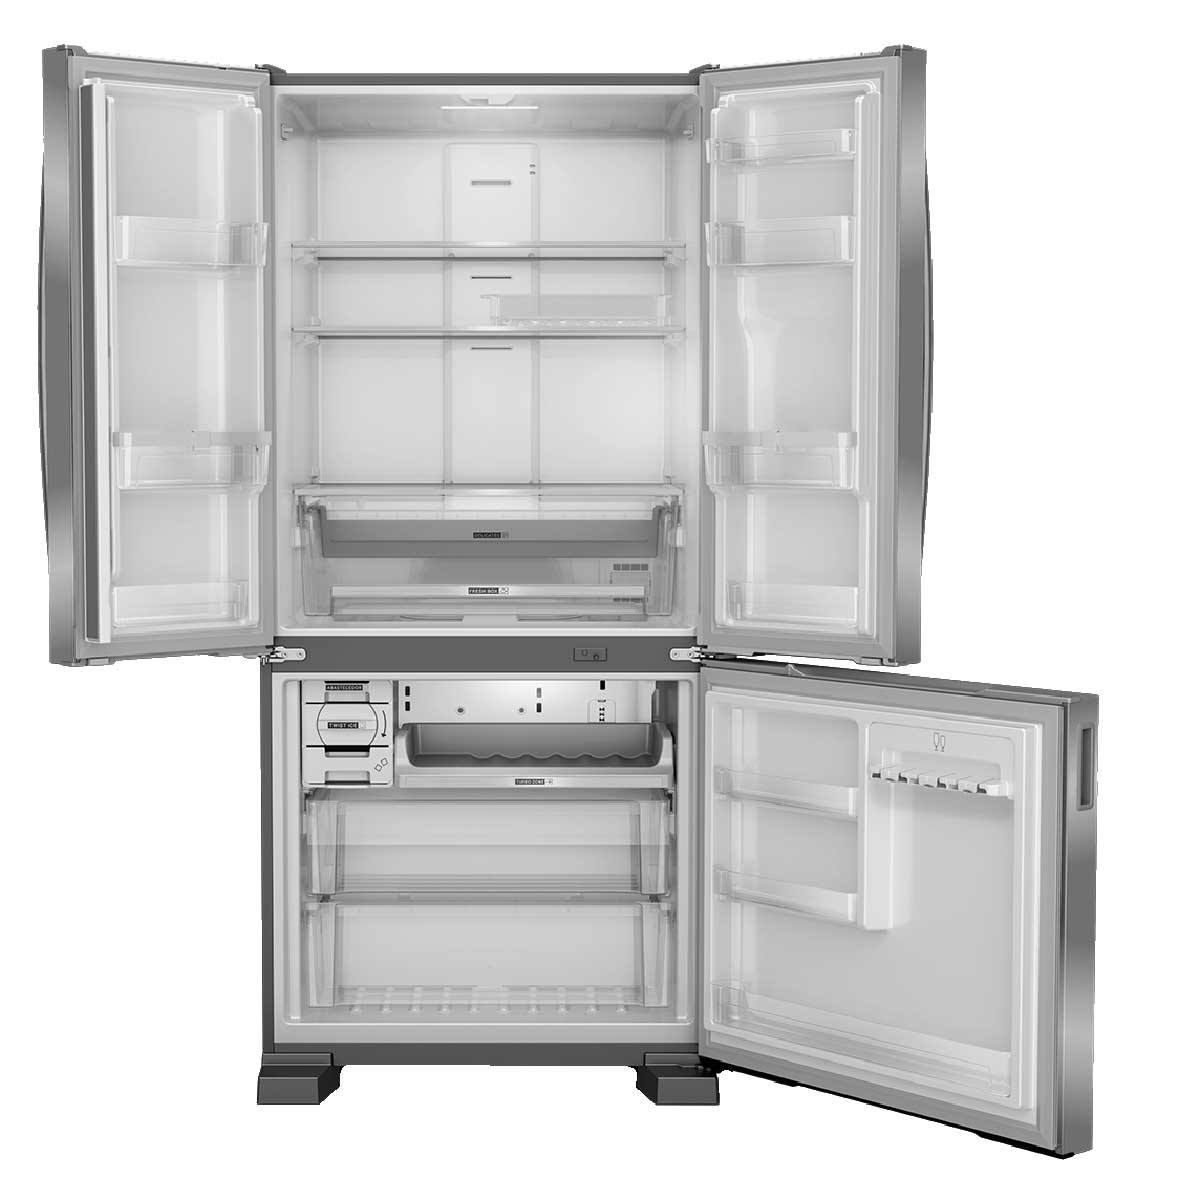 geladeira-brastemp-bro85ak-frost-free-side-inverse-3-portas-554-litros-cor-inox-110v-2.jpg